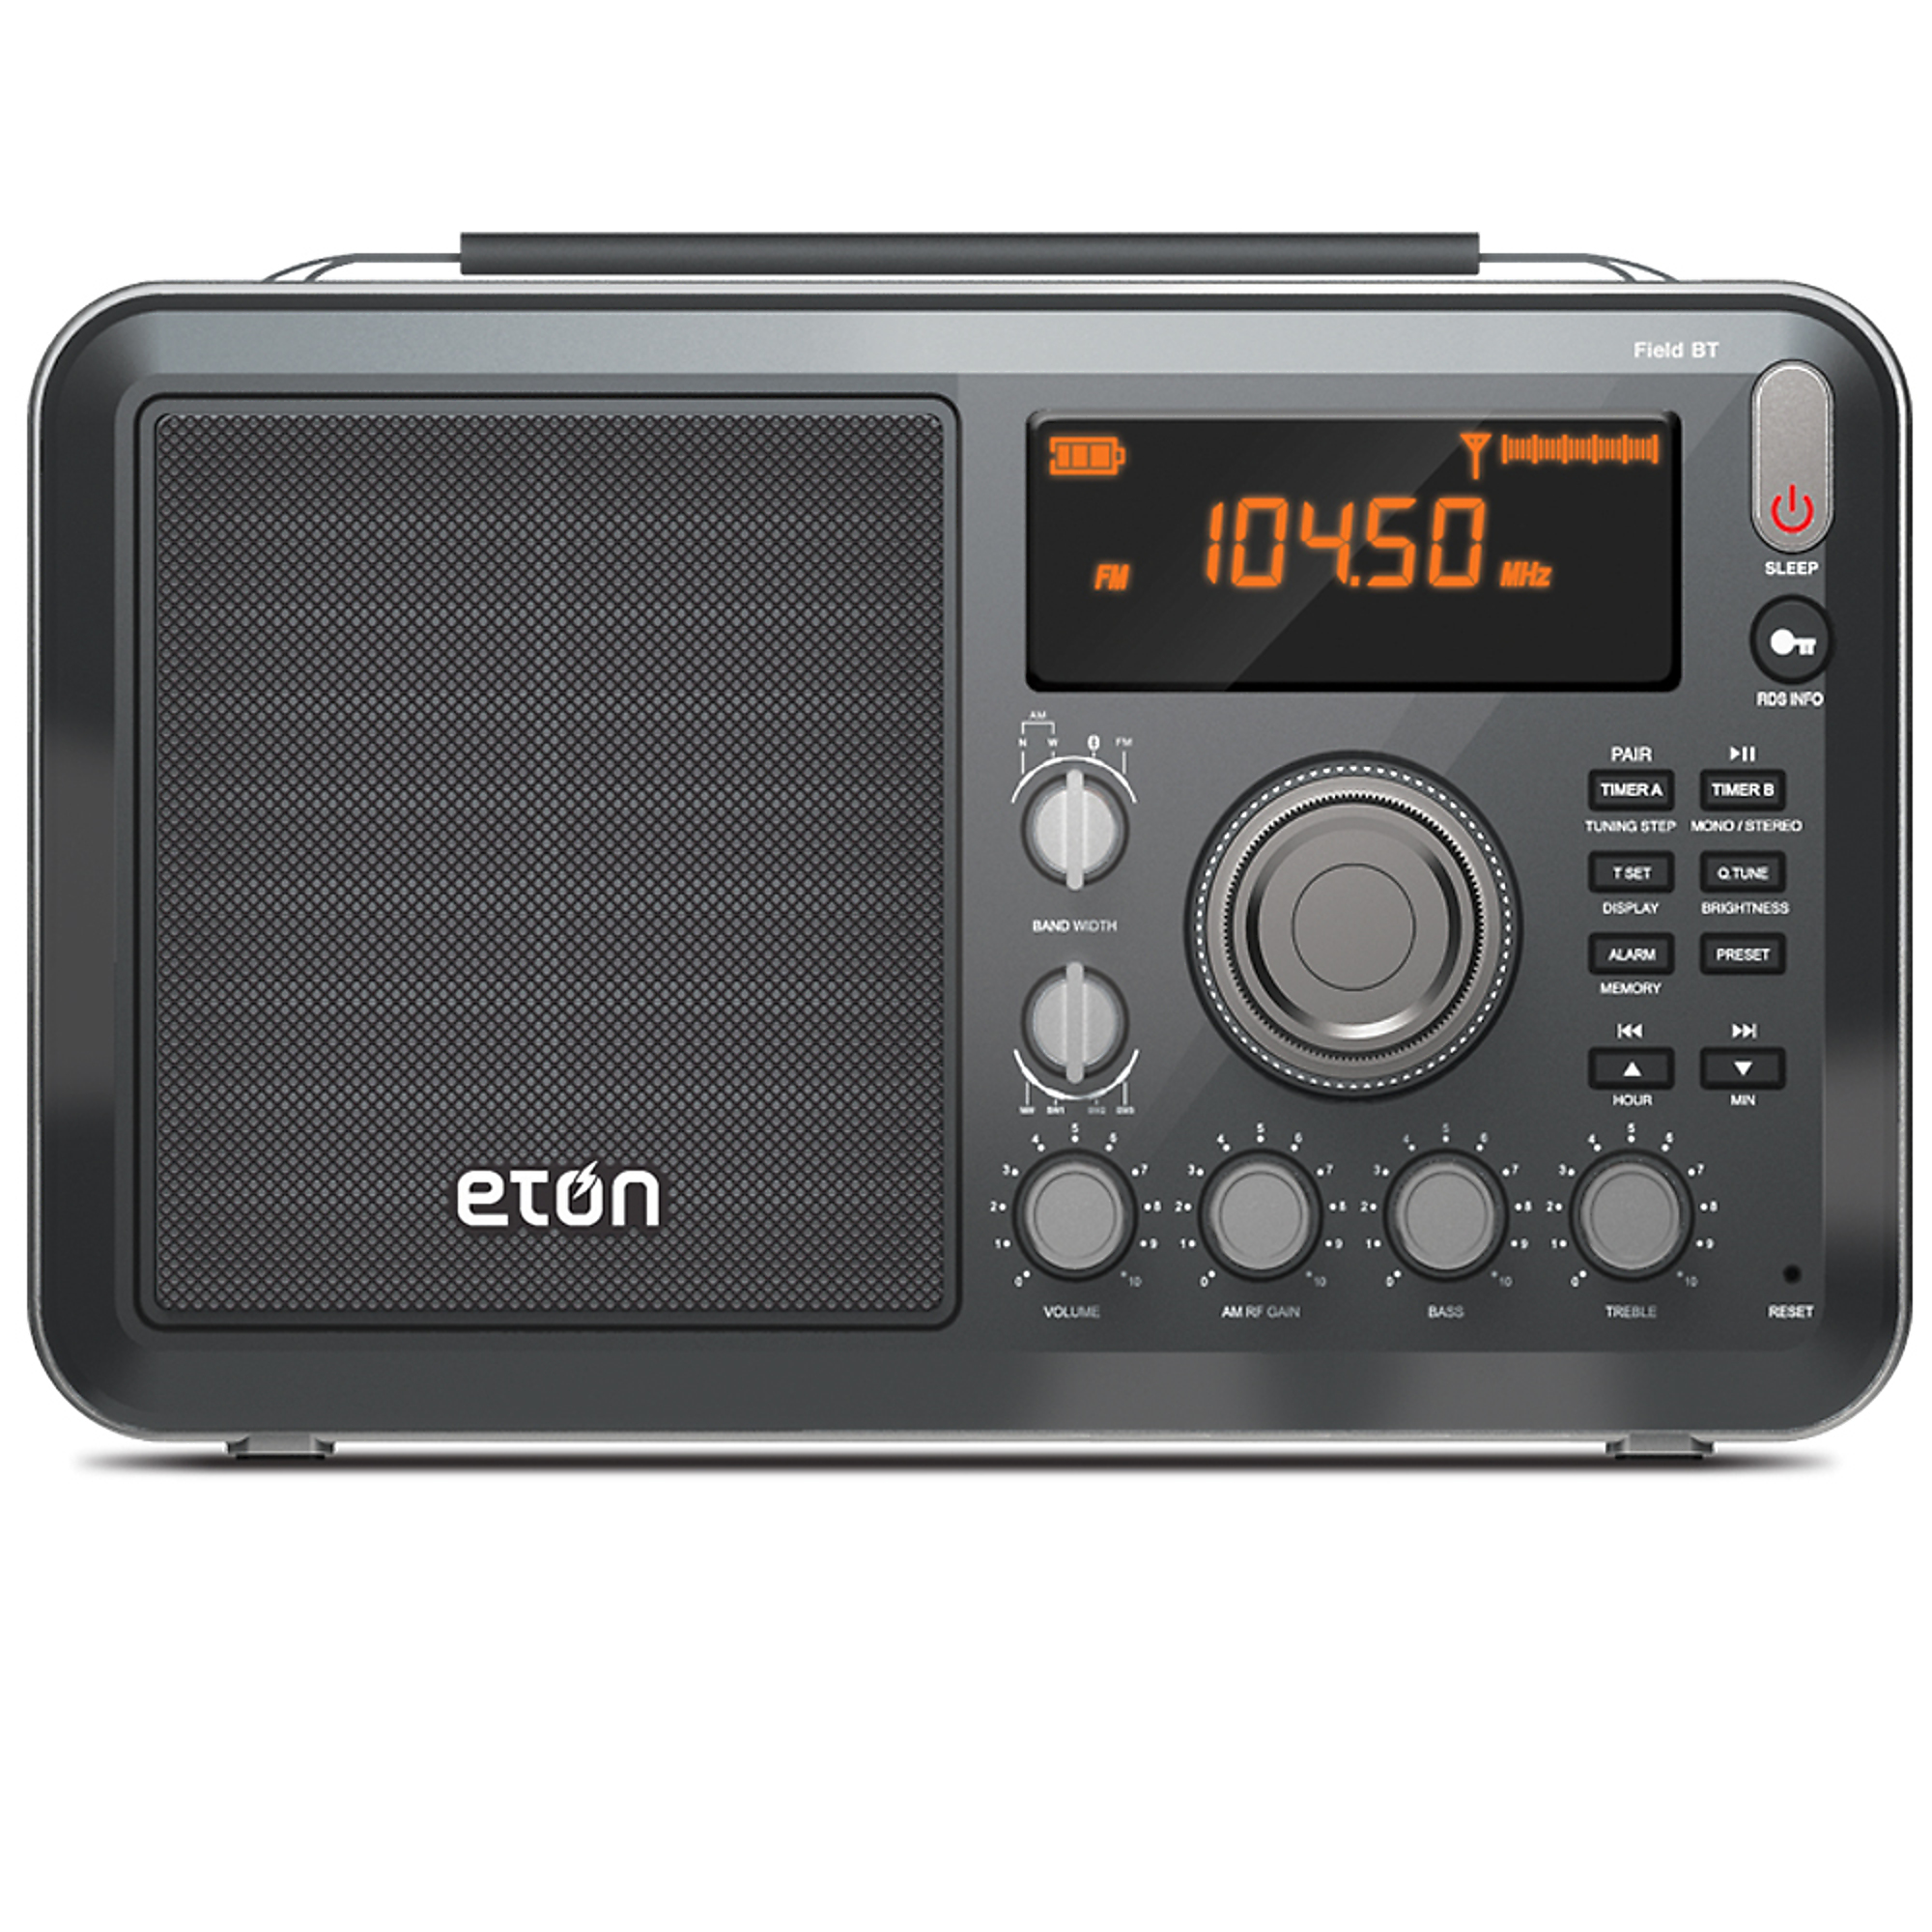 eton American Red Cross, Elite Field AM(MW), FM and Shortwave (SW) Radio, Display Type LCD, Model NELITEFIELD